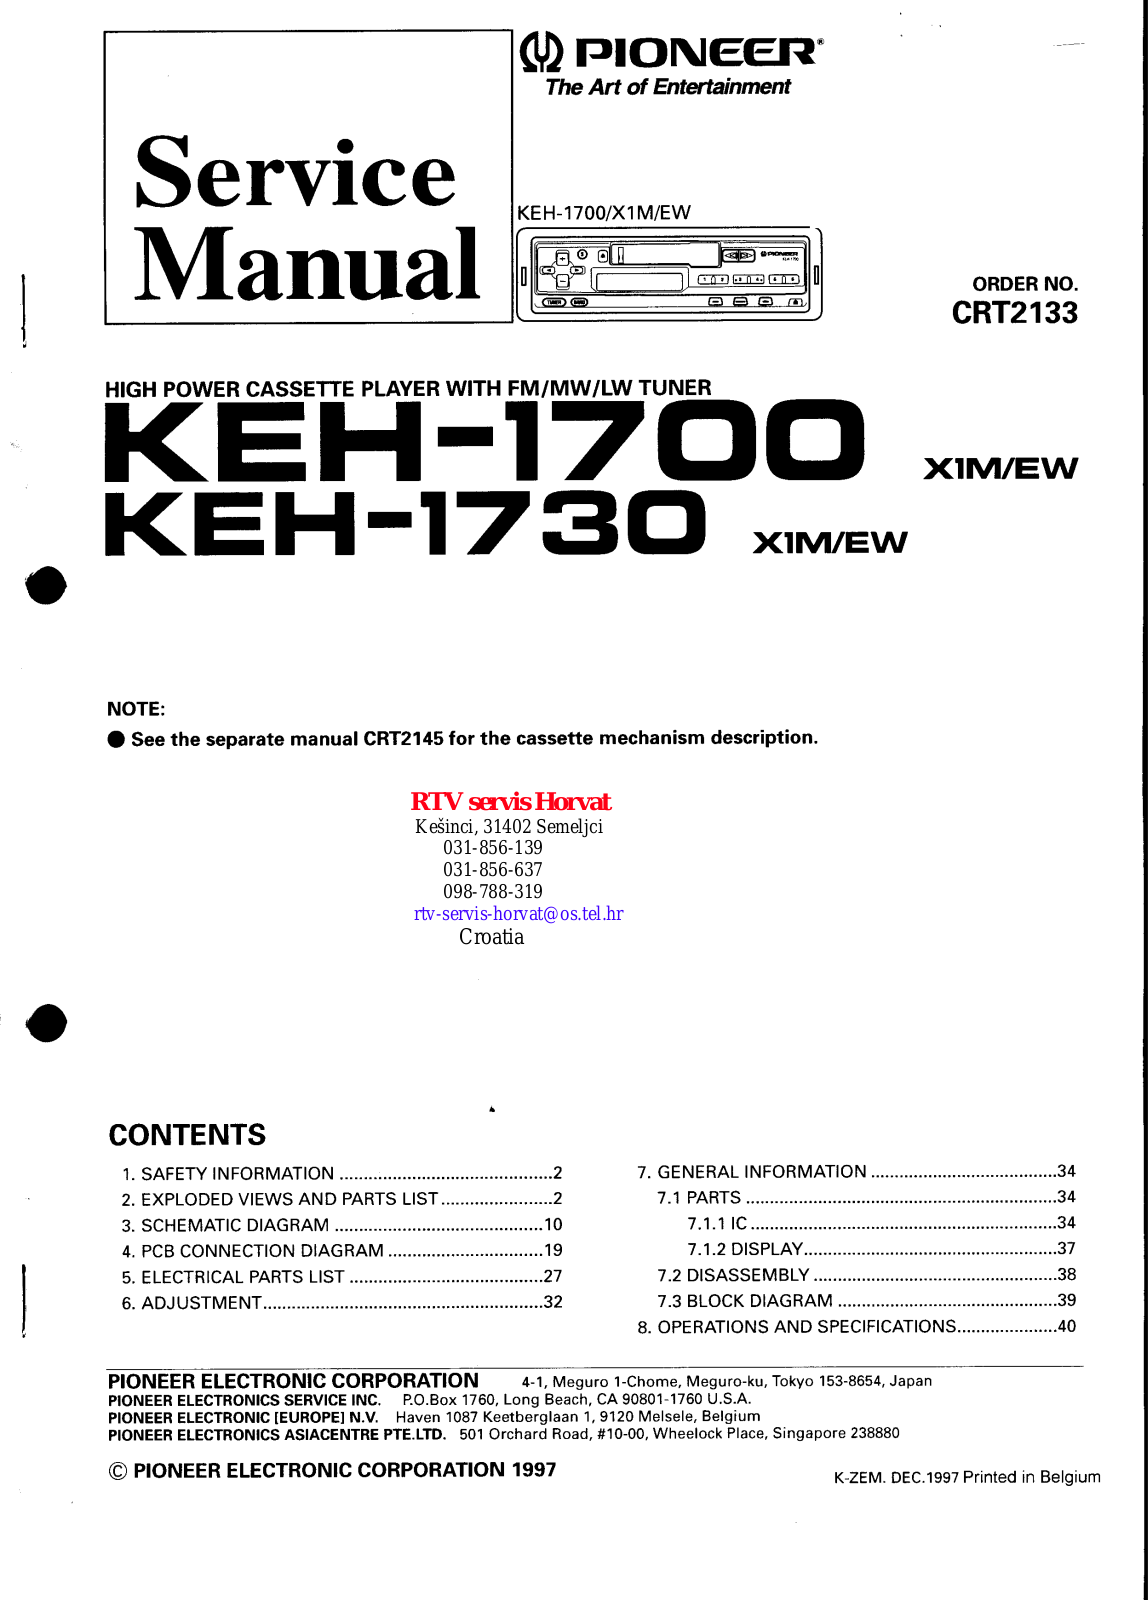 PIONEER KEH-1700, KEH-1730 Service Manual